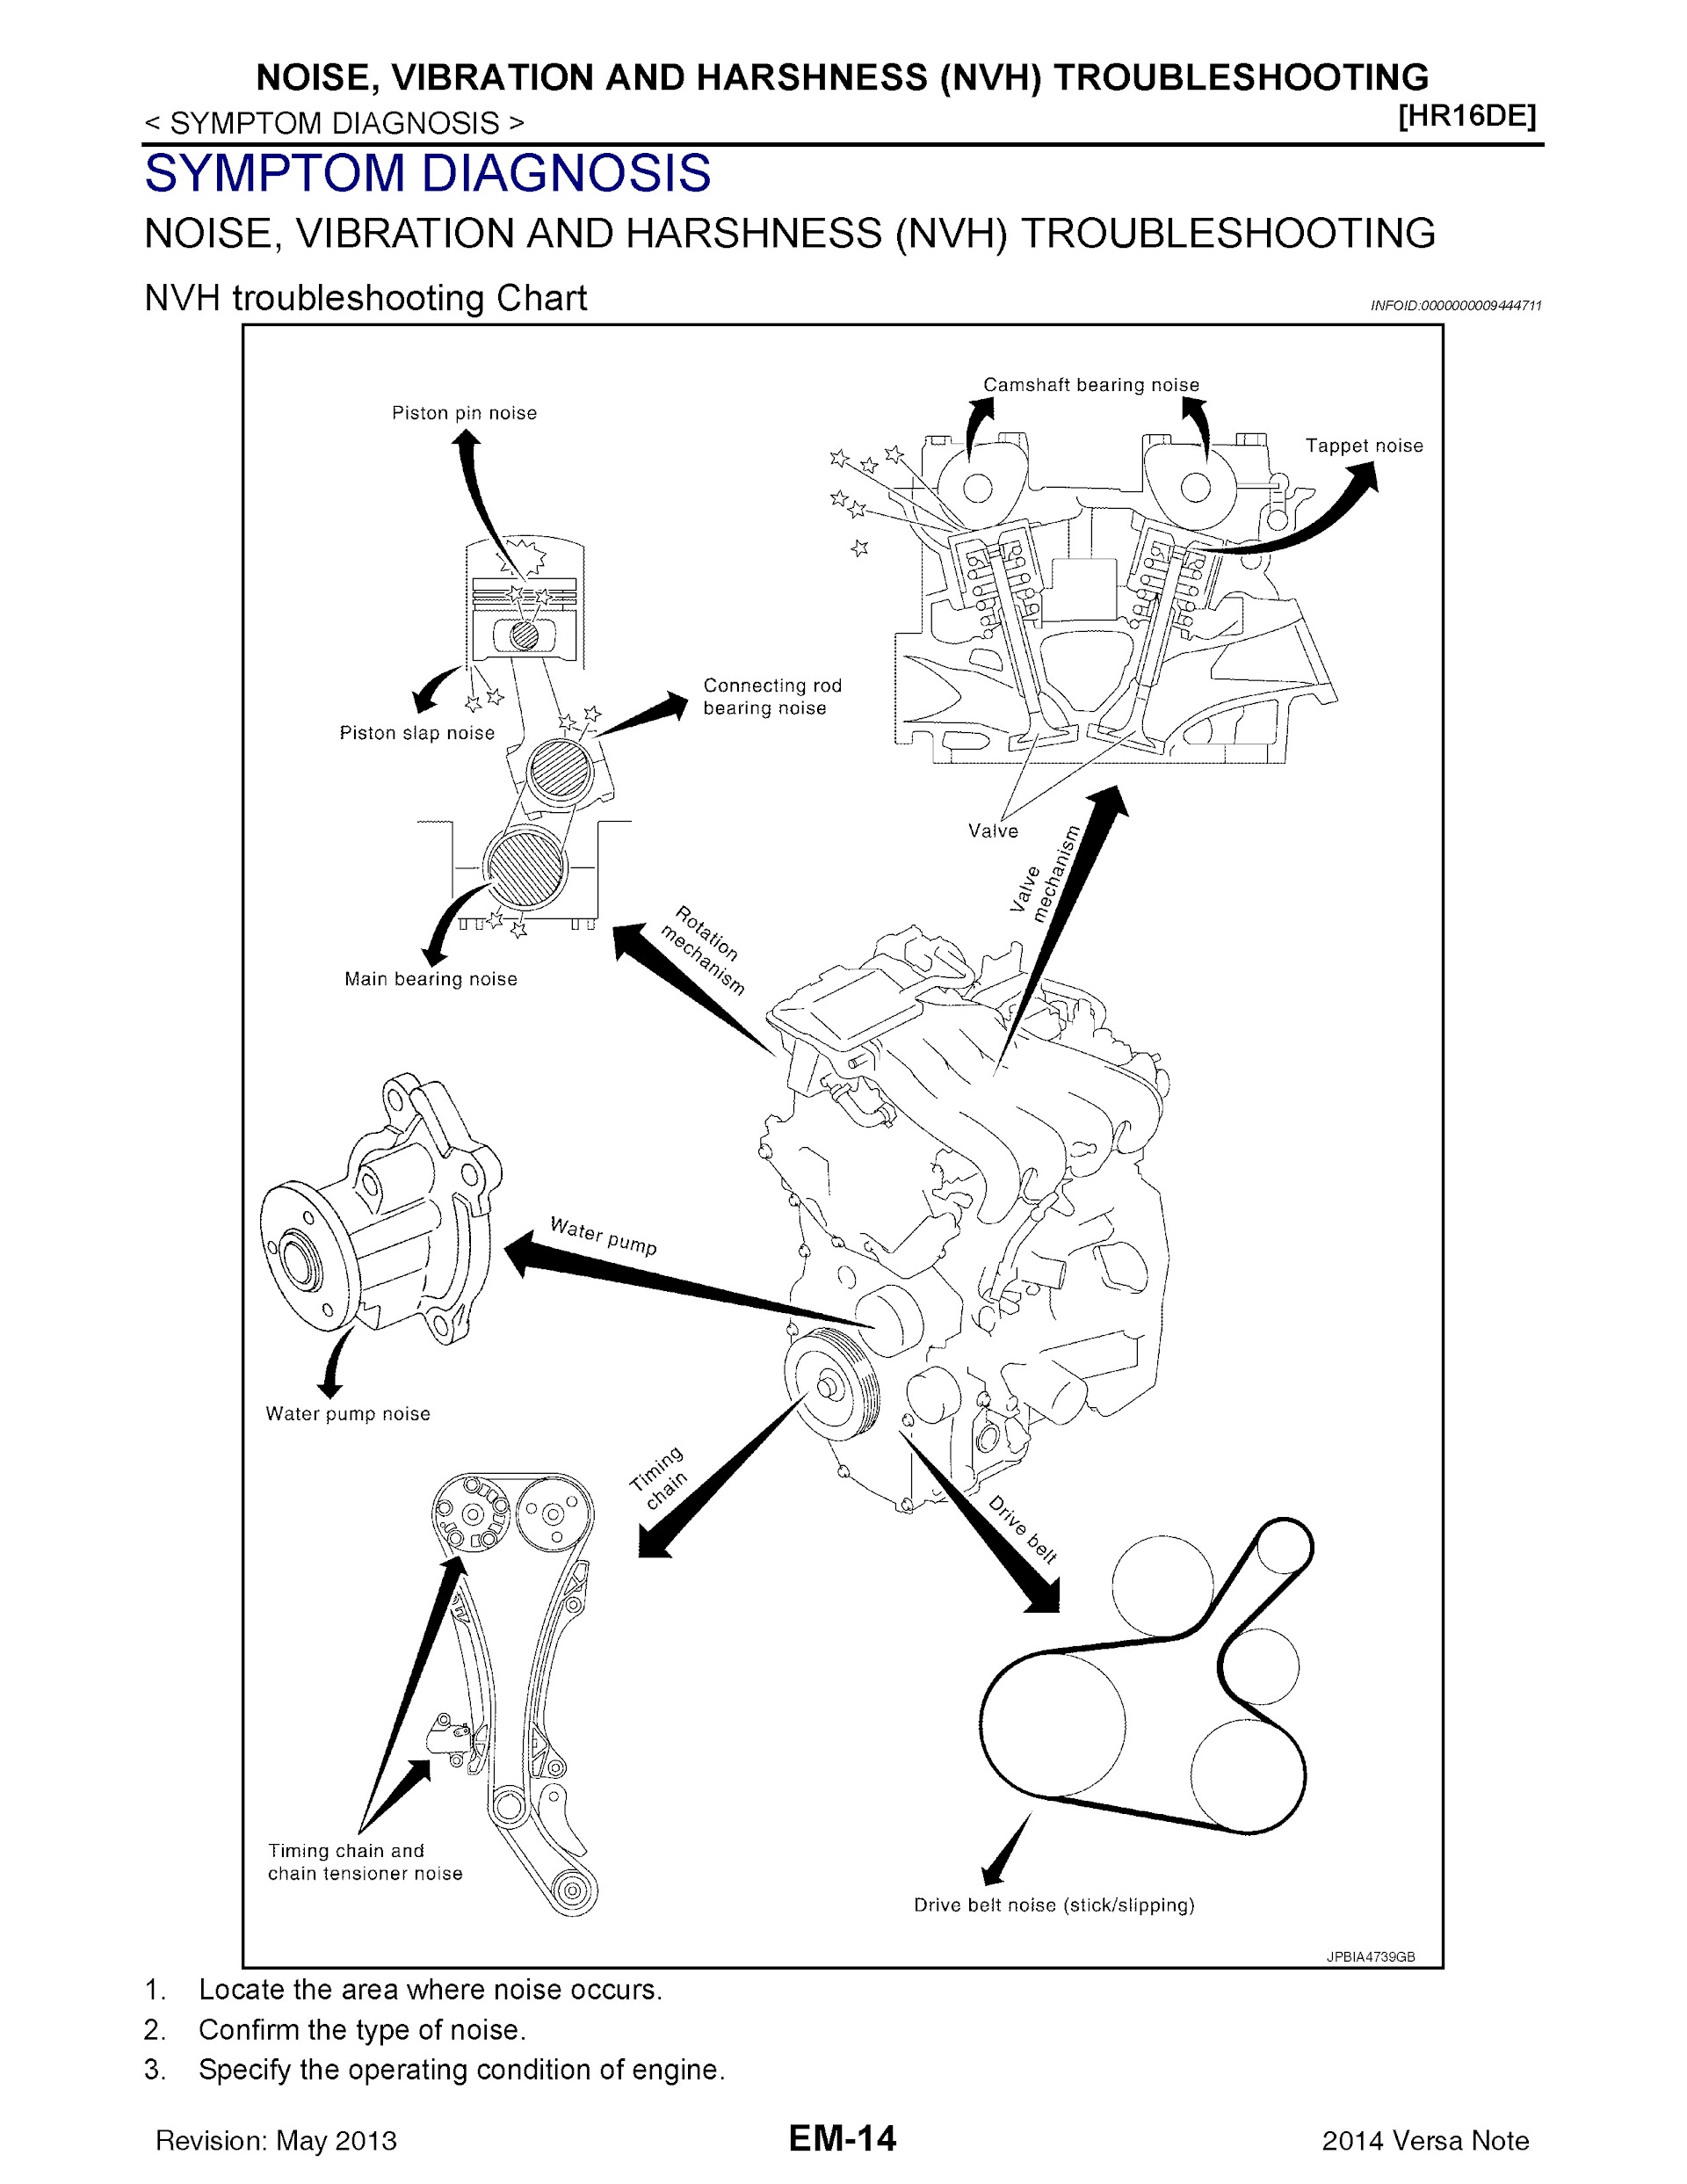 2014 Nissan Versa Note Repair Manual, Noise, Vibration aand Harshness Troubleshooting